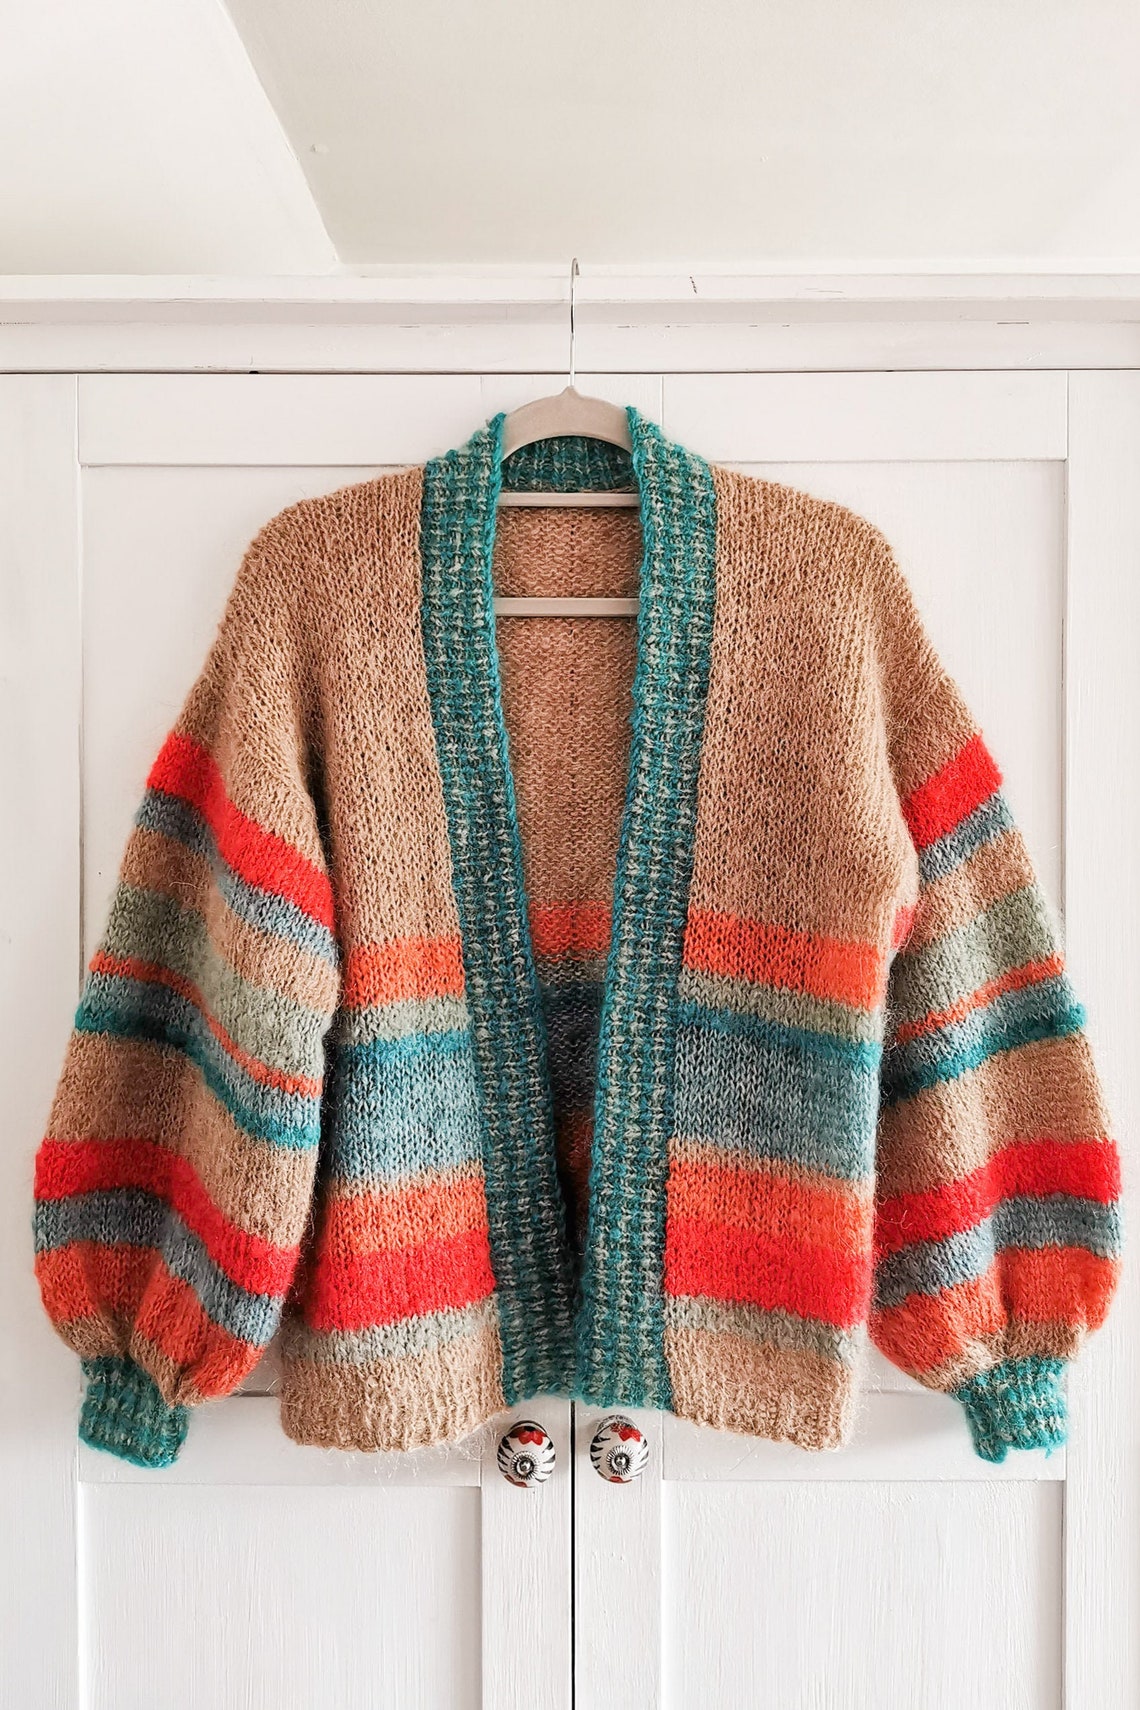 Made My Day Cardigan Knitting Pattern - Etsy